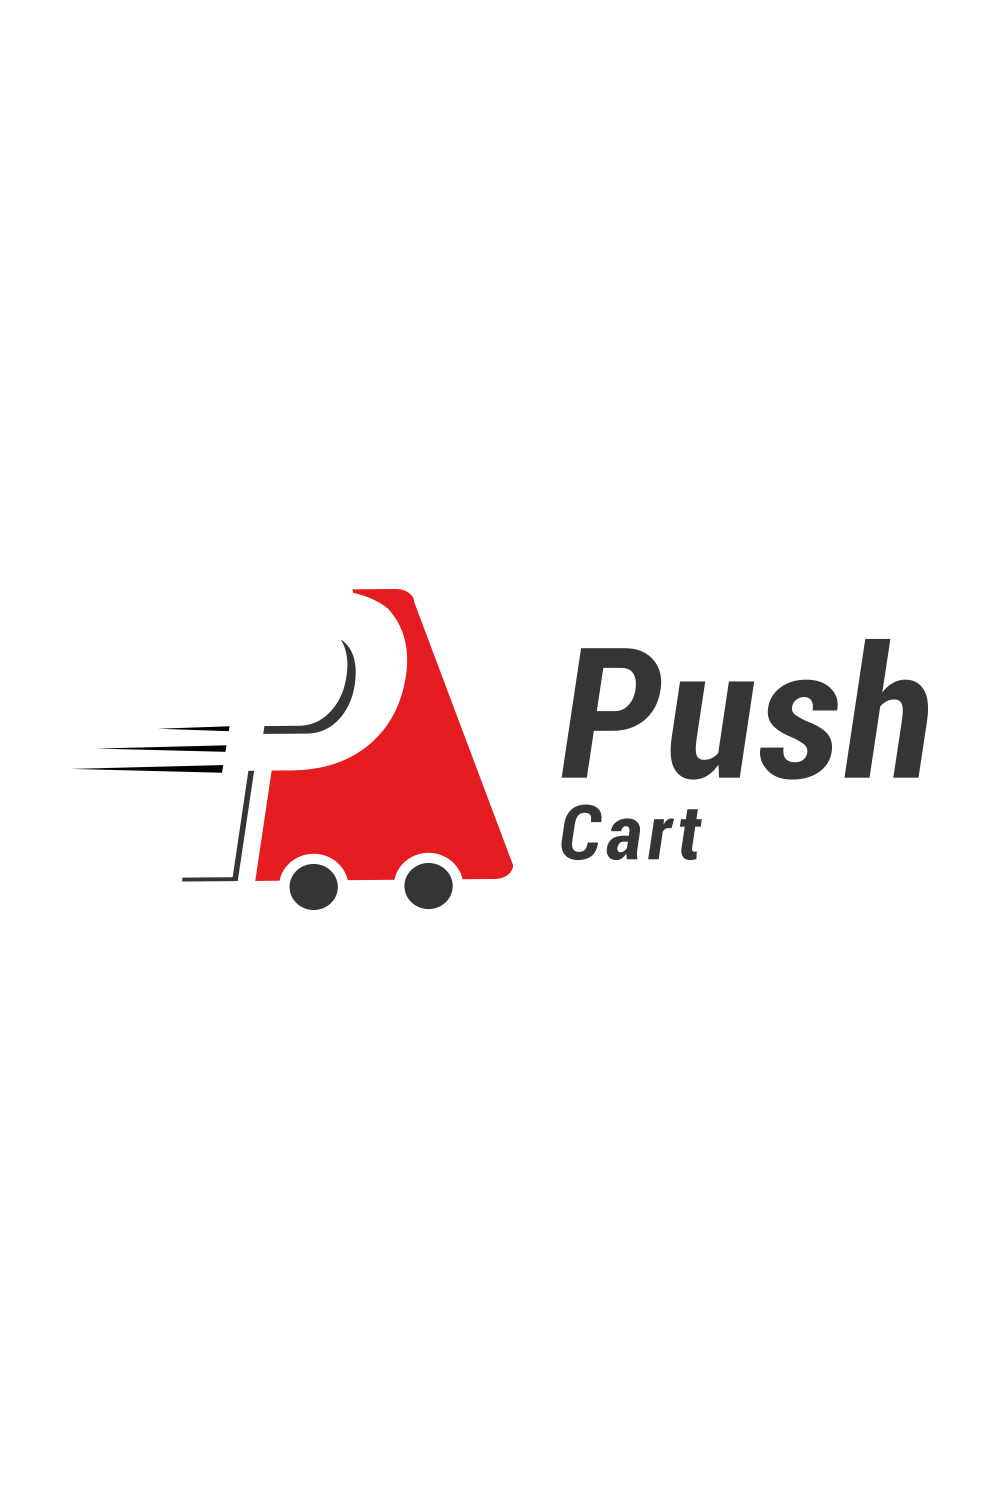 ( Letter P ) Push cart ( Eccomerce ) logo design pinterest preview image.